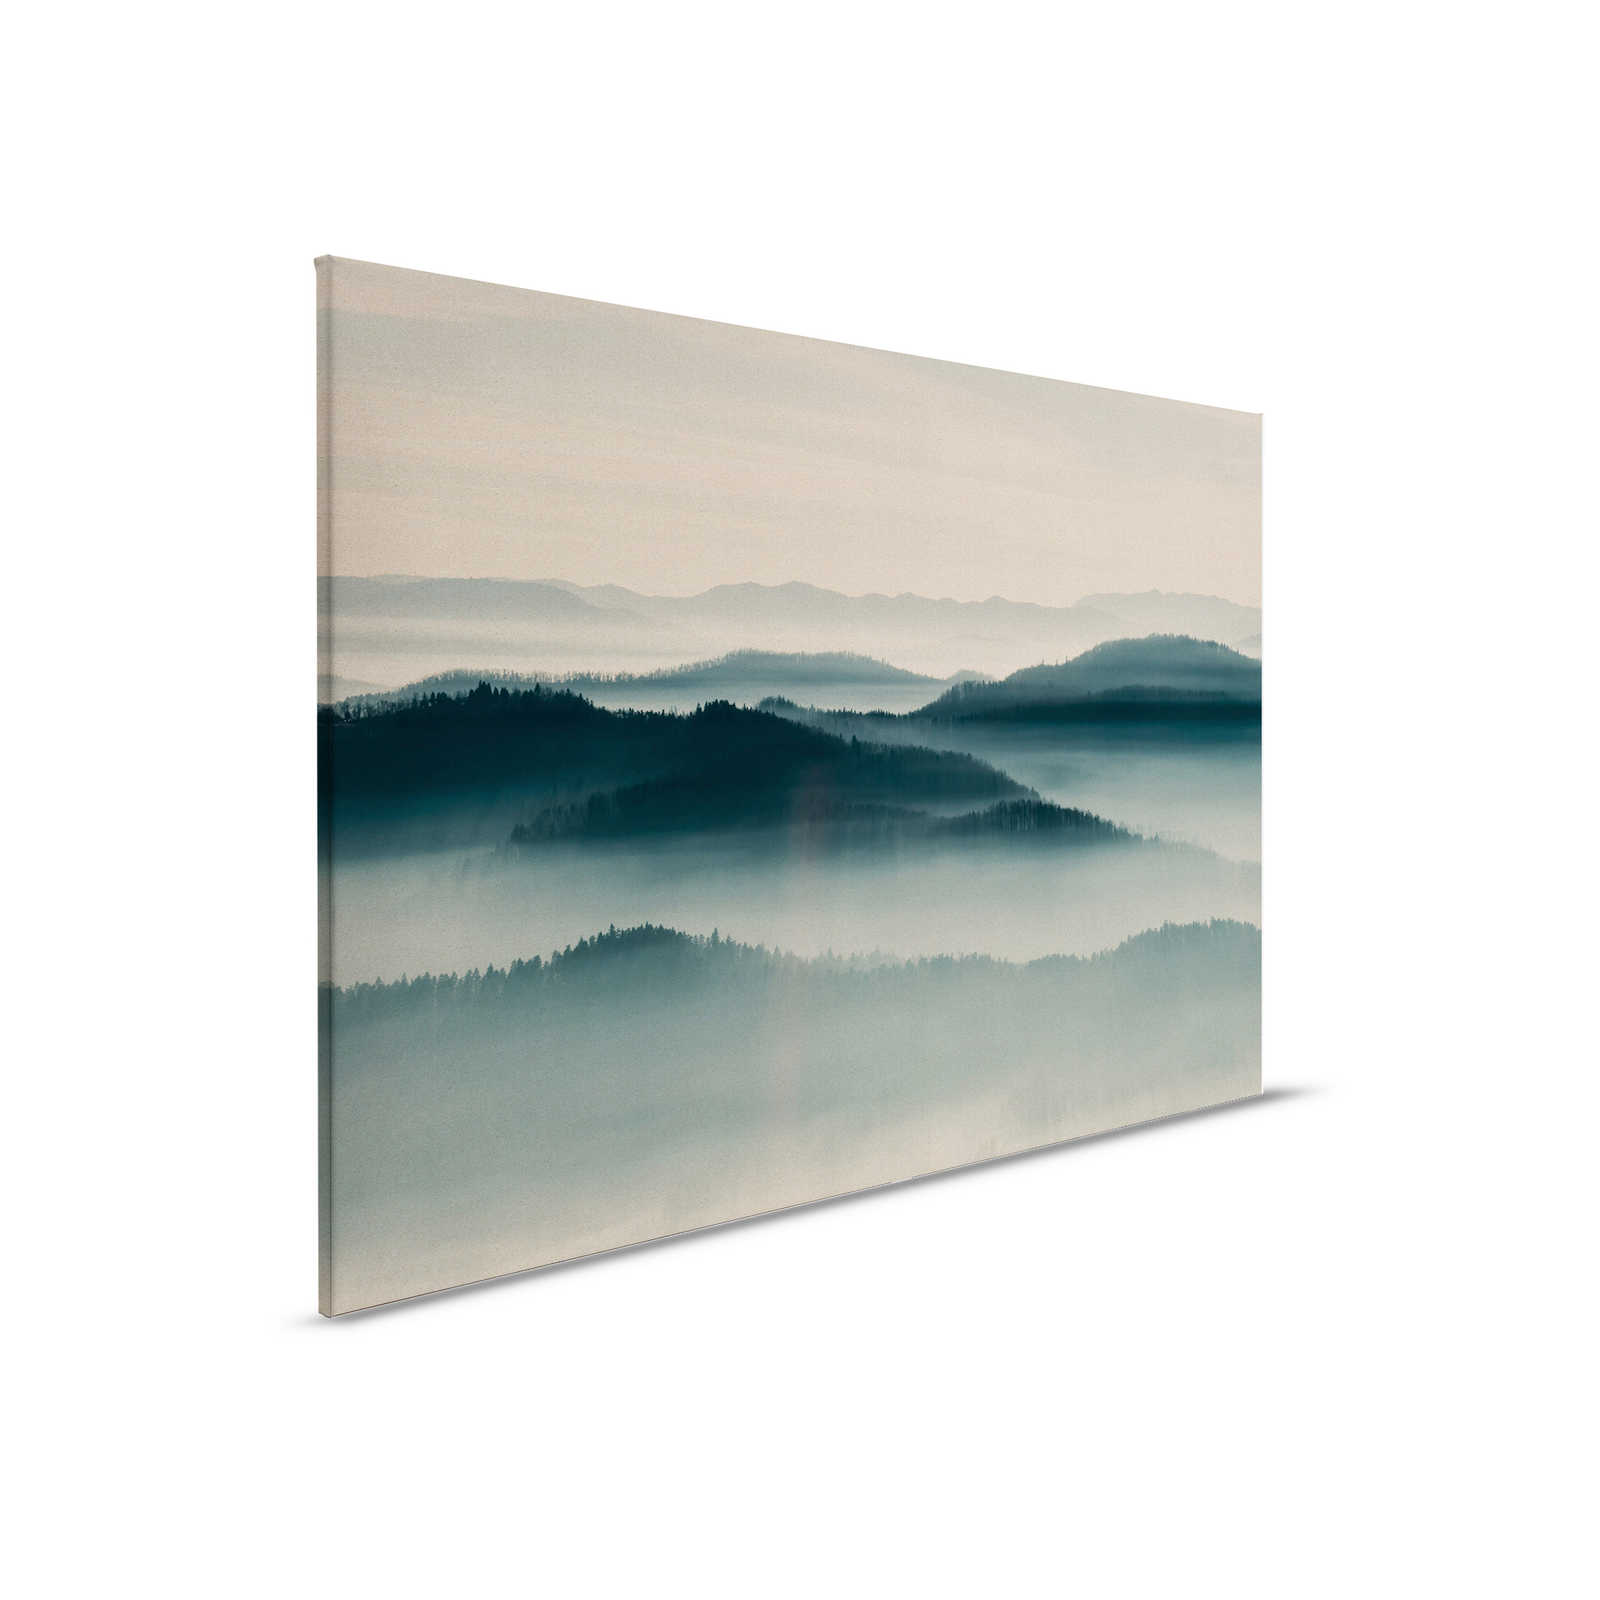 Horizon 1 - Leinwandbild mit Nebel-Landschaft, Natur Sky Line in Pappe Struktur – 0,90 m x 0,60 m
